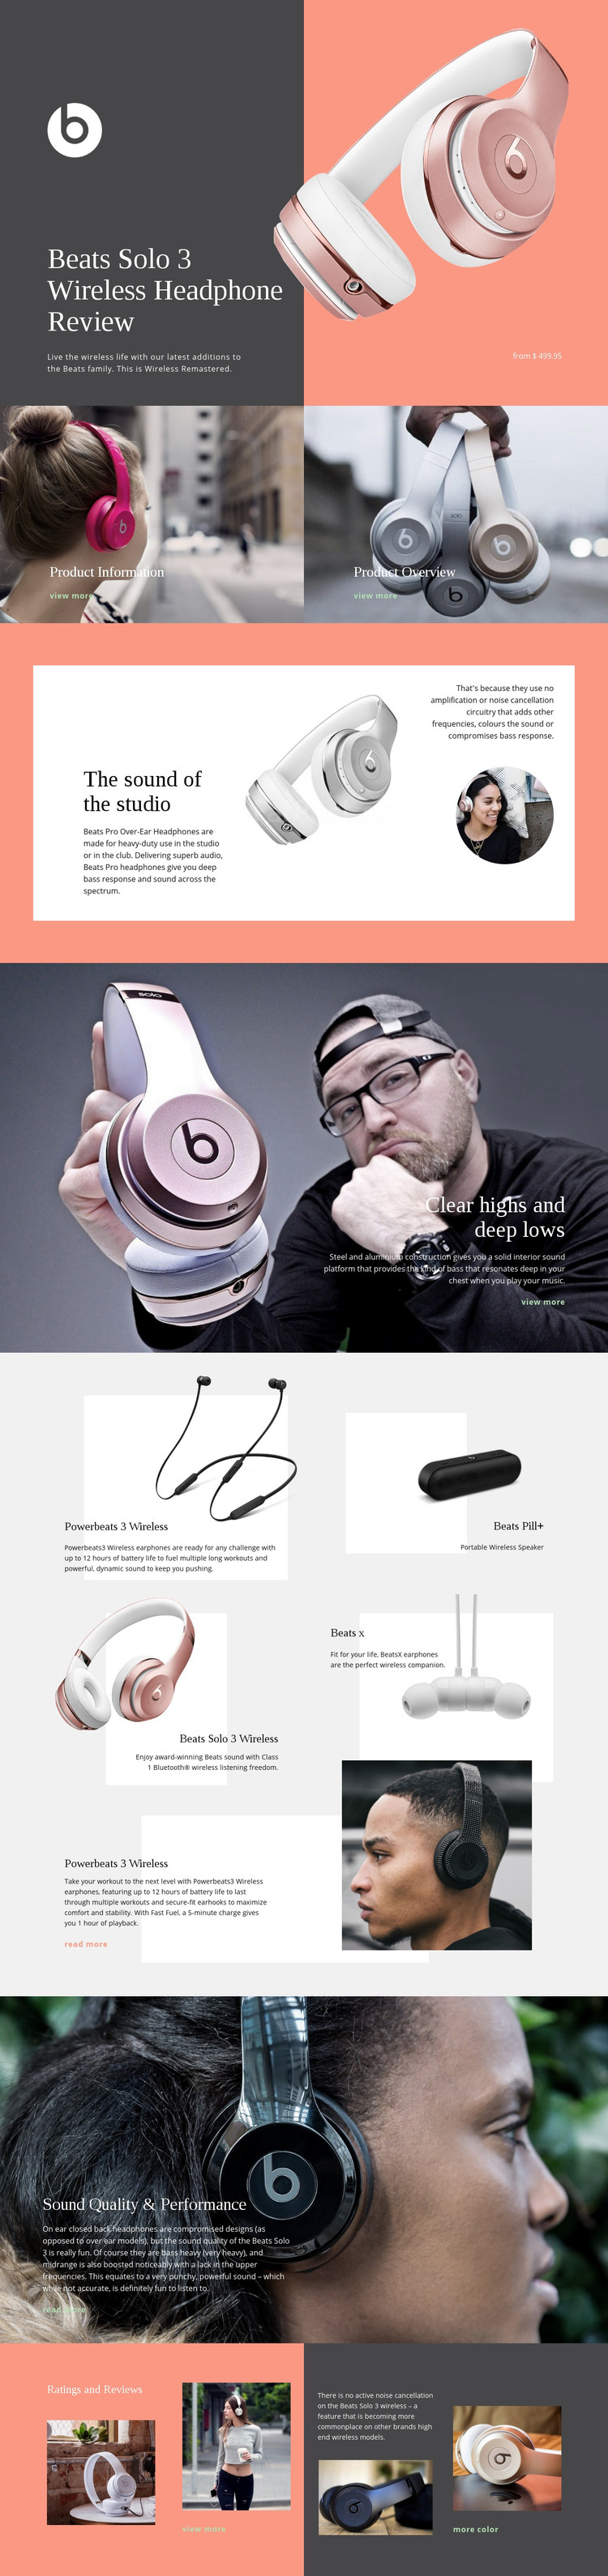 Beats Wireless Homepage Design